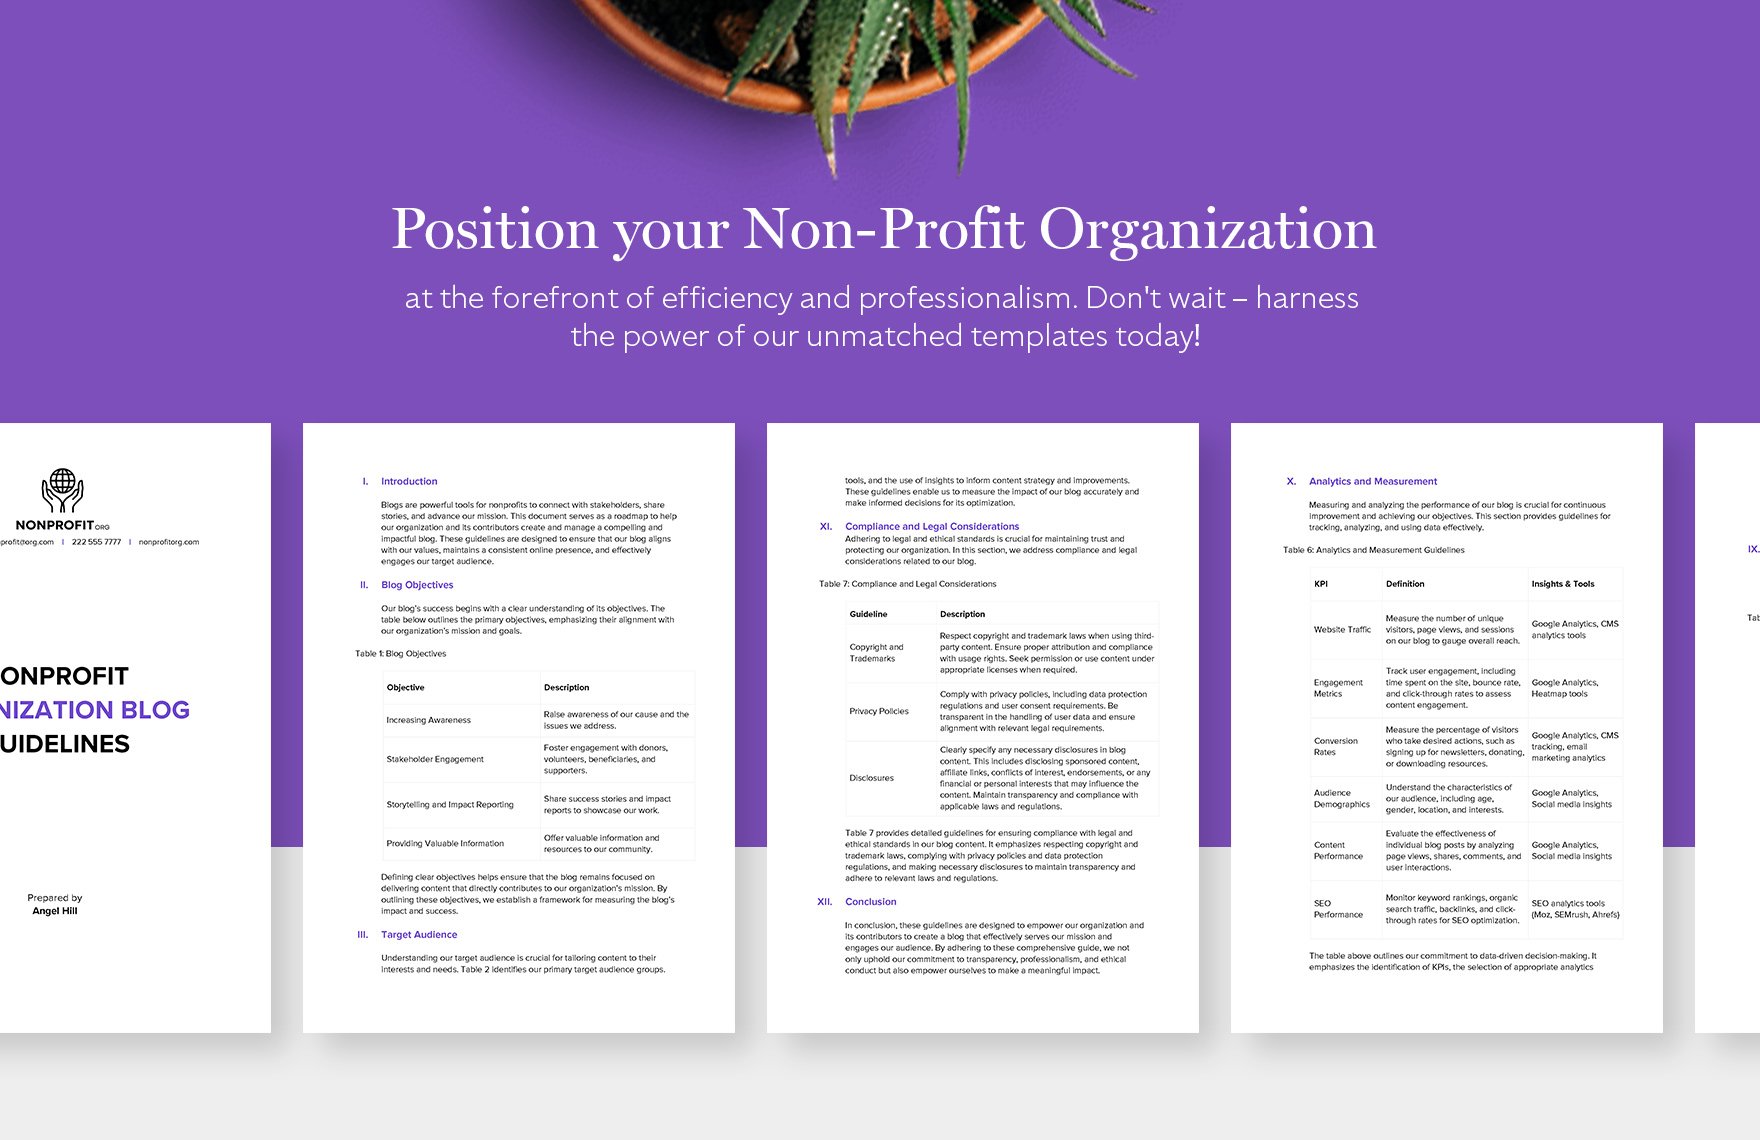 Nonprofit Organization Blog Guidelines Template